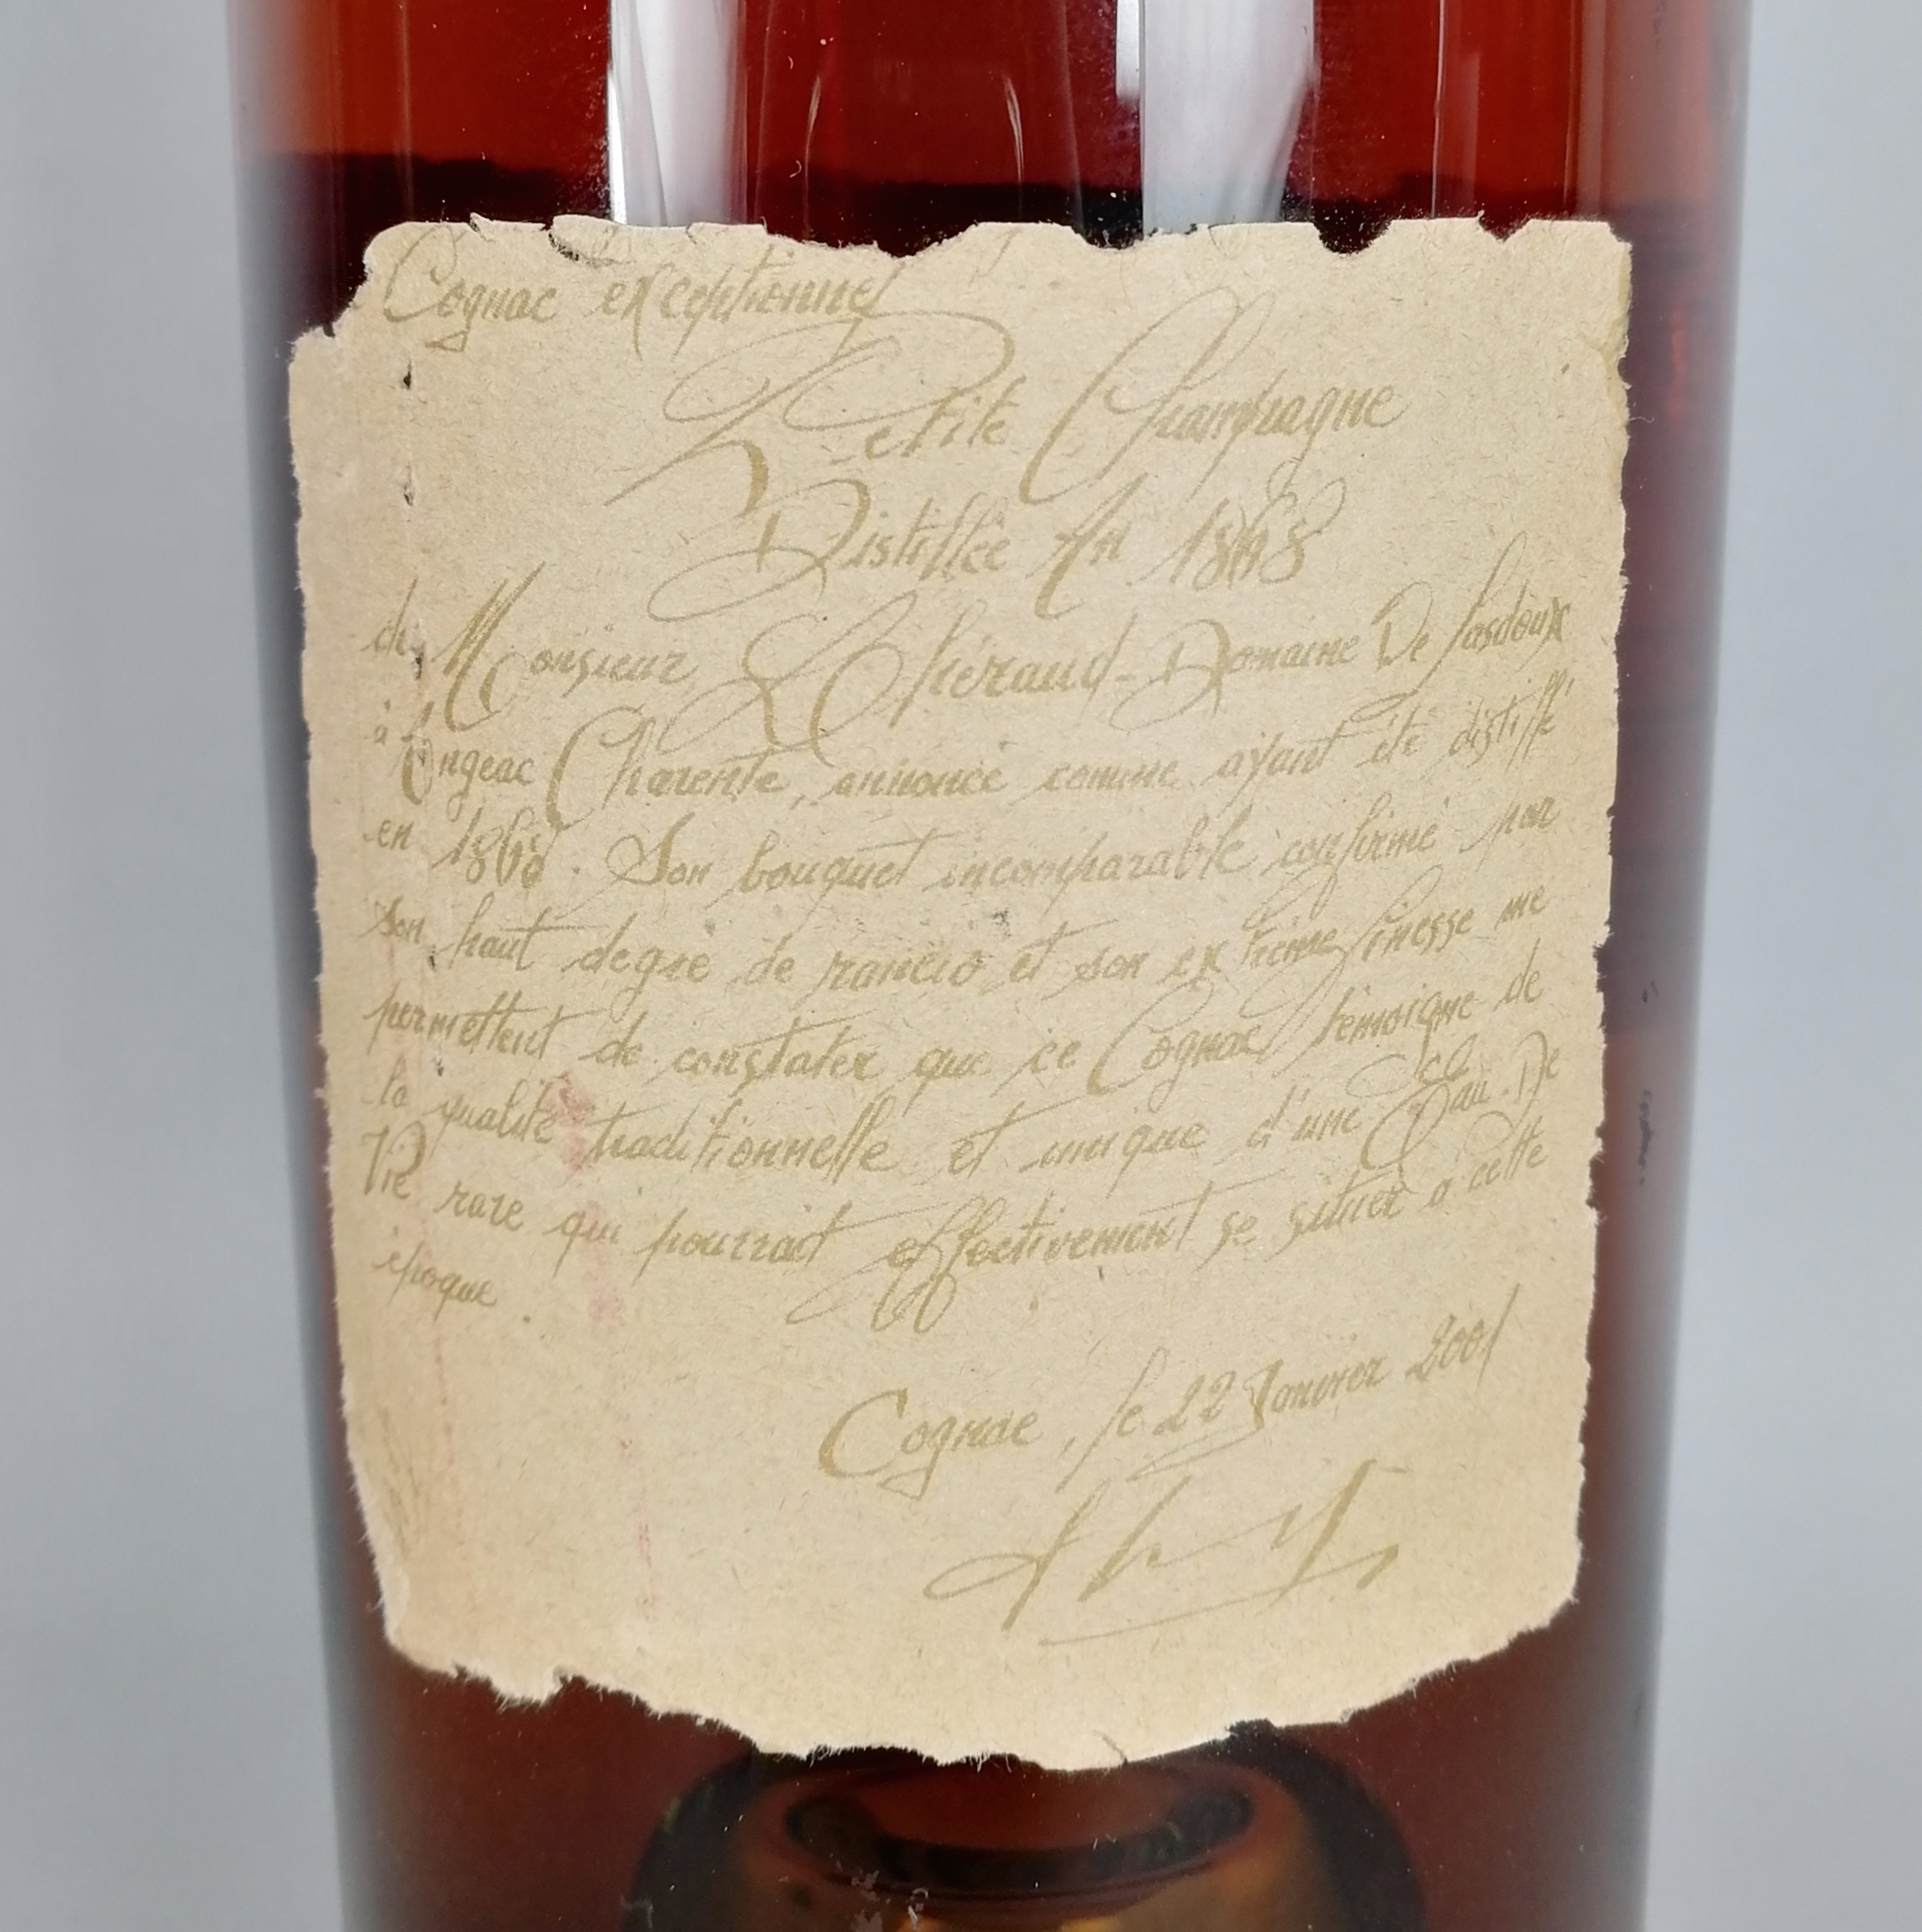 Cognac CHARLES LHERAUD - Domaine de Lasdoux, Petite Champagne, Vintage 1868. Imbottigliamento - Image 4 of 5